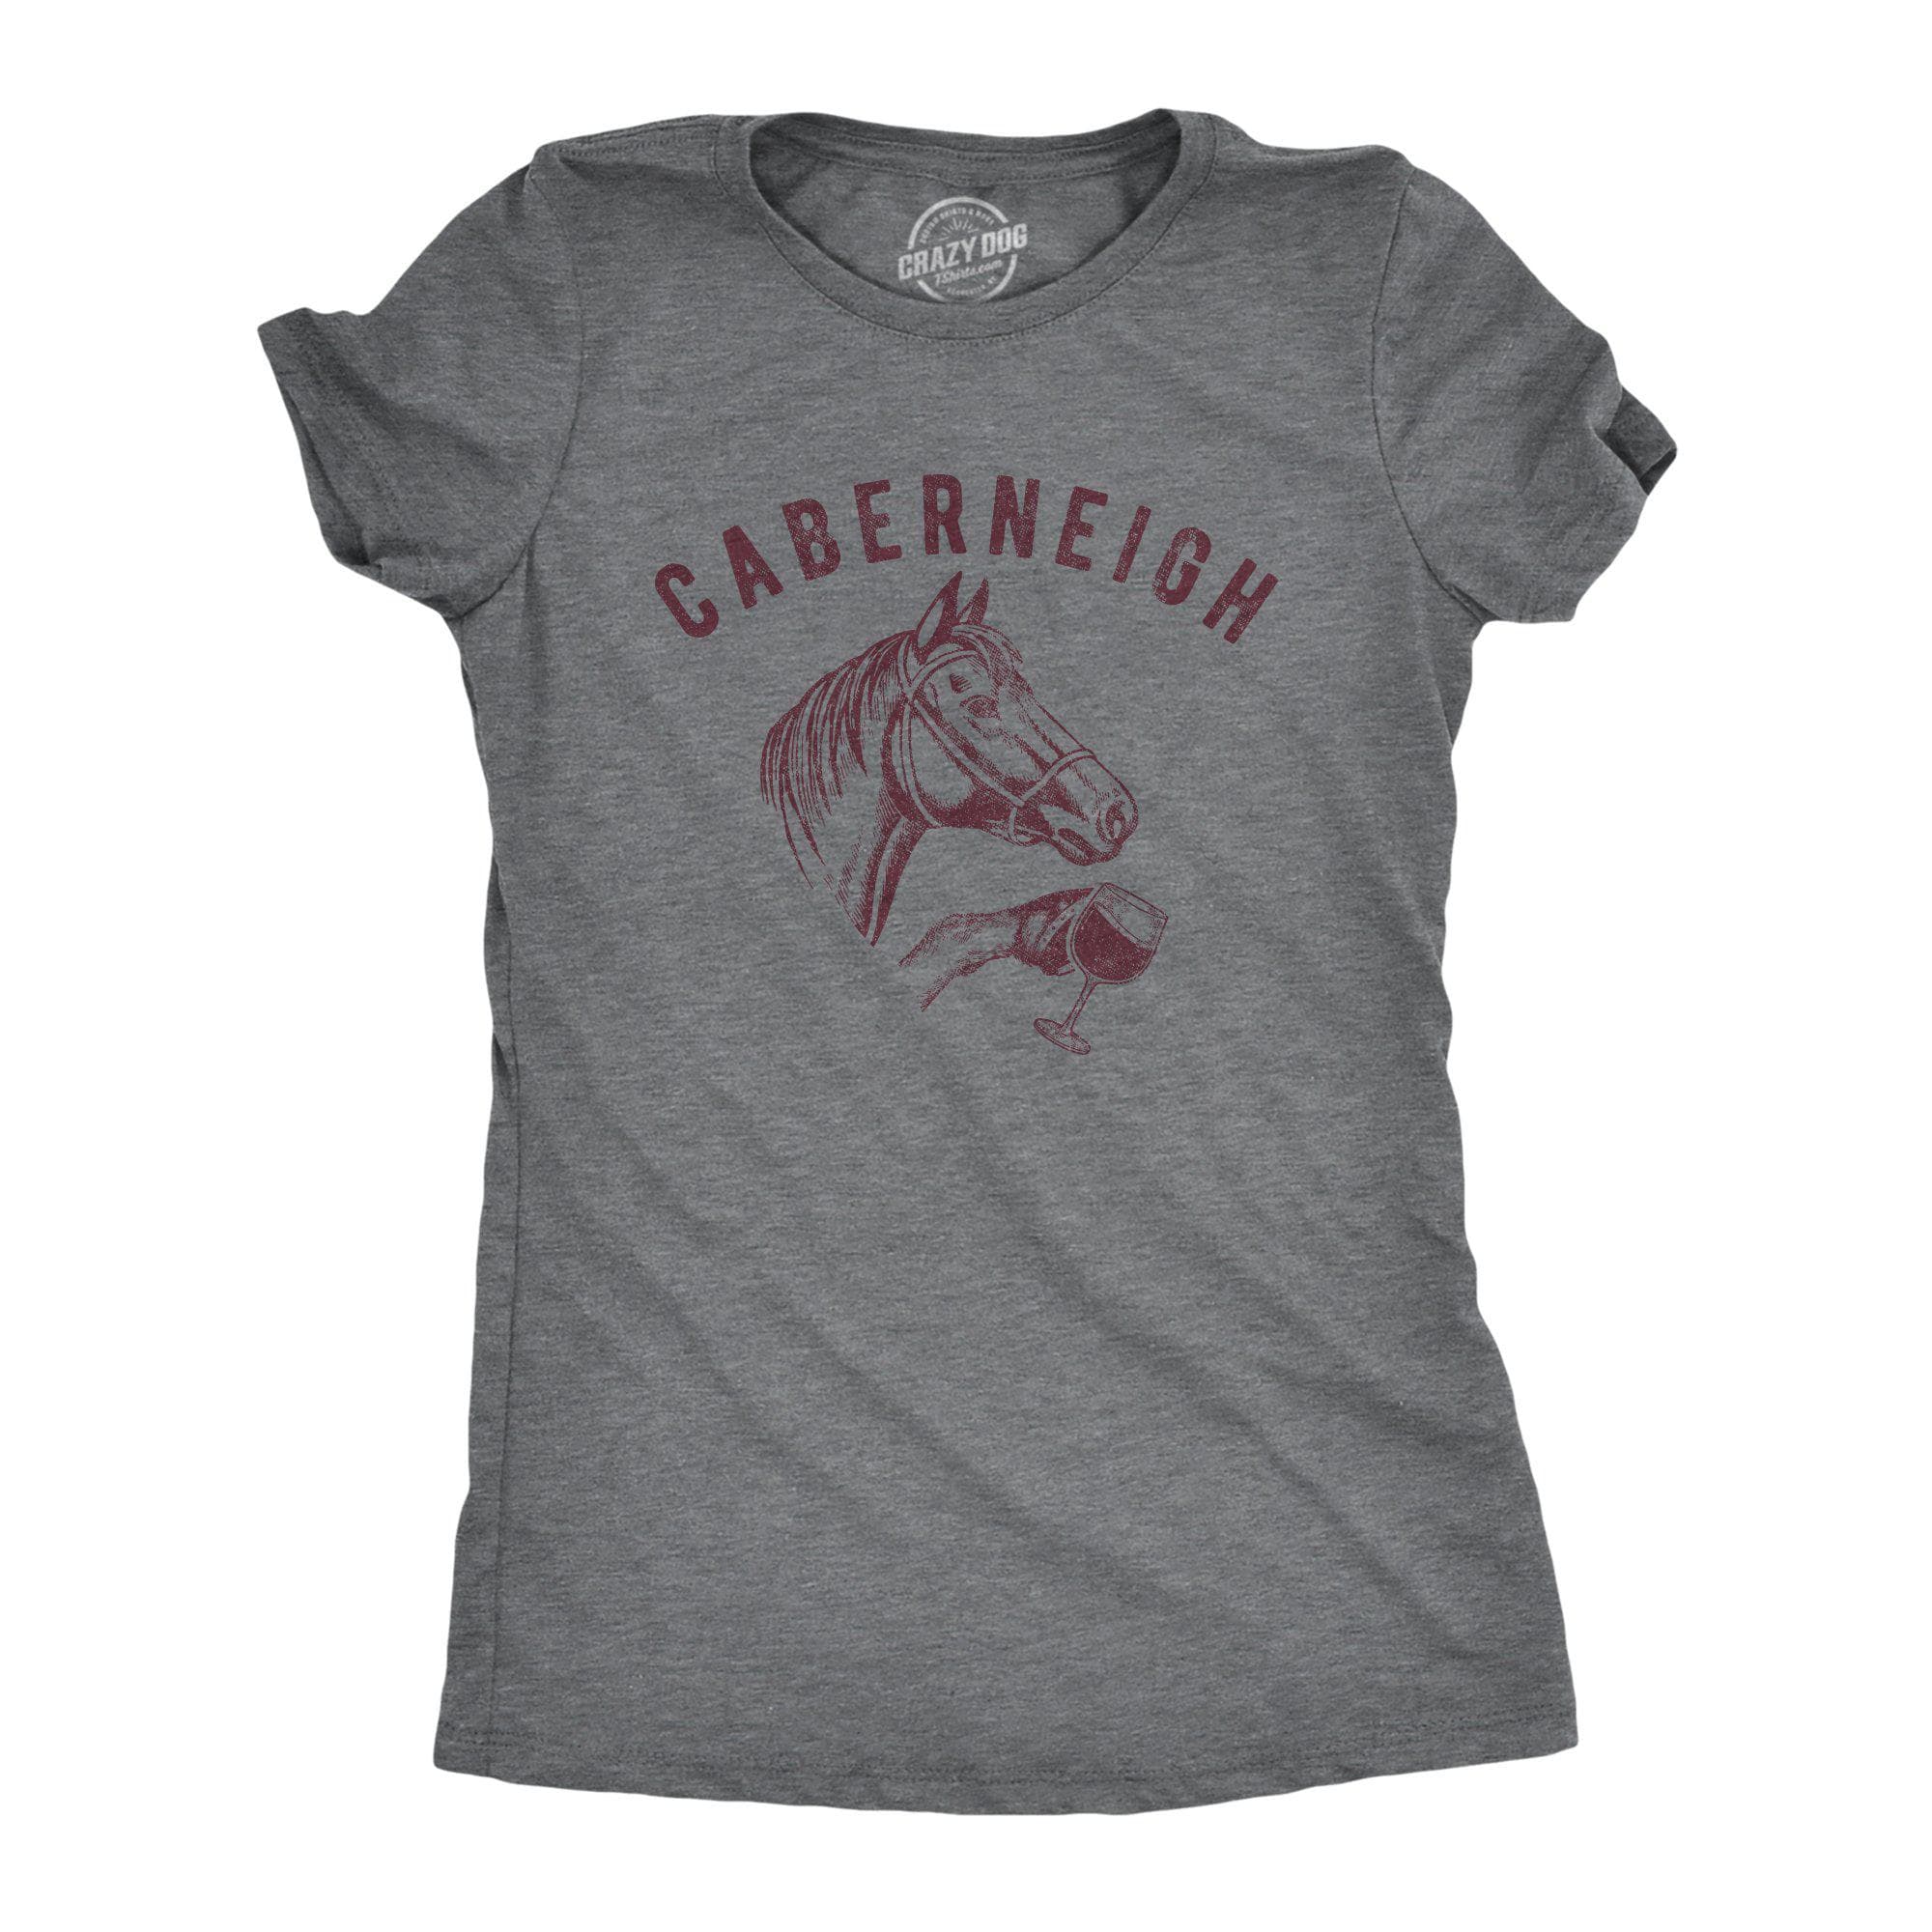 Caberneigh Women's Tshirt - Crazy Dog T-Shirts